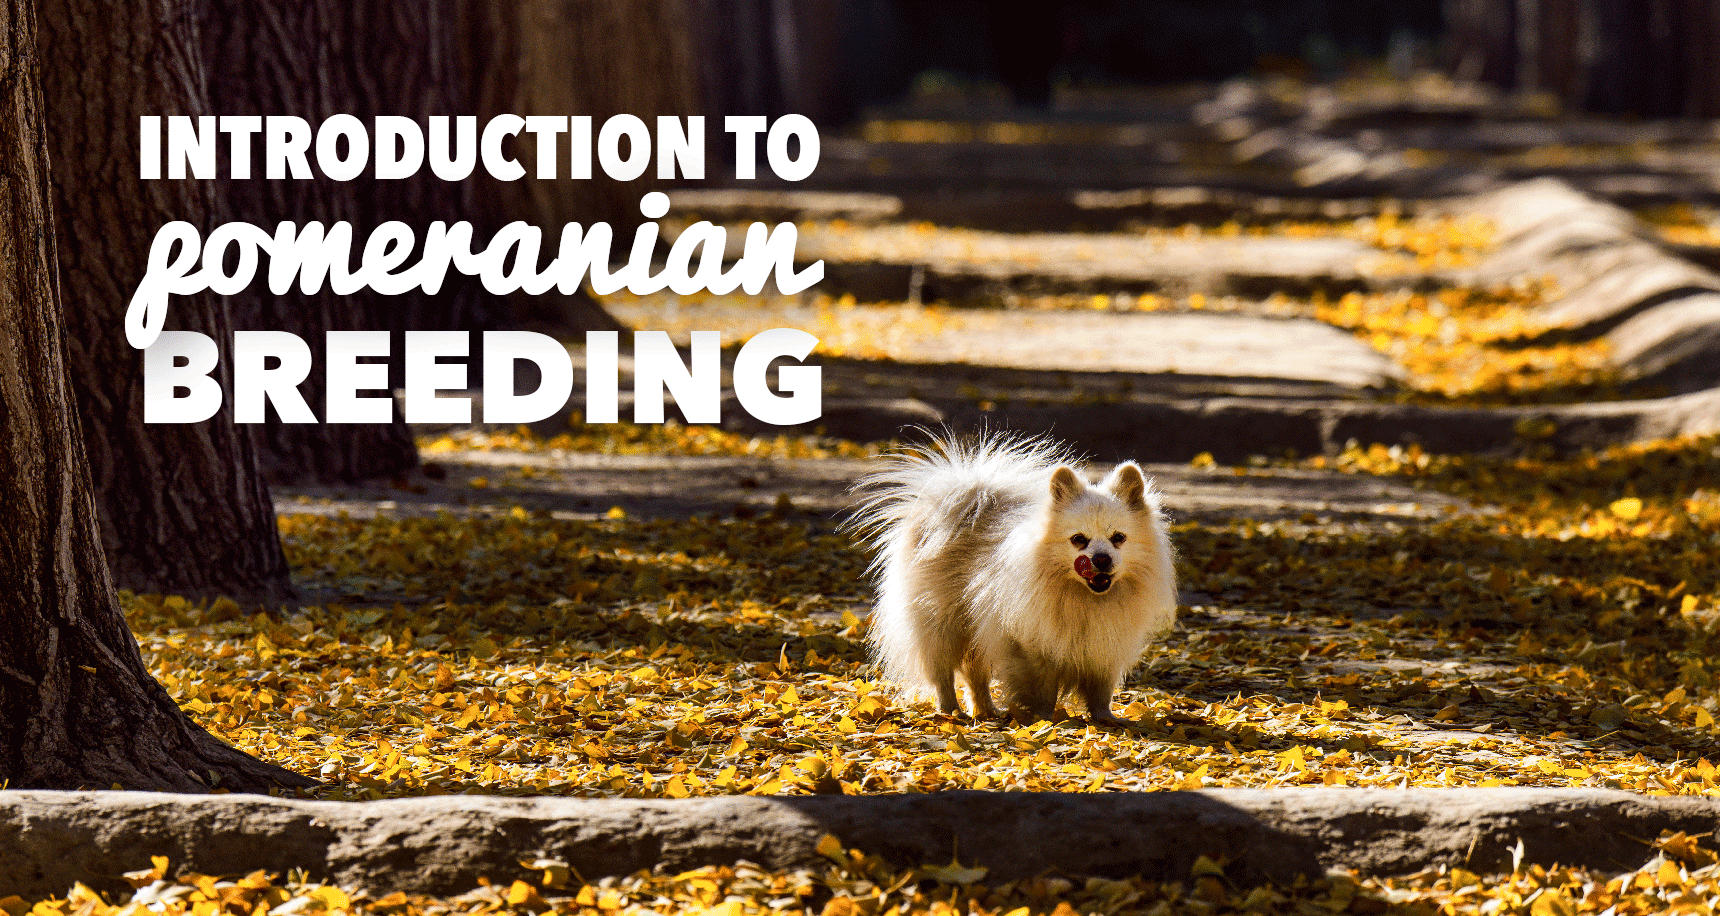 Breeding Pomeranians A Must Read Introduction